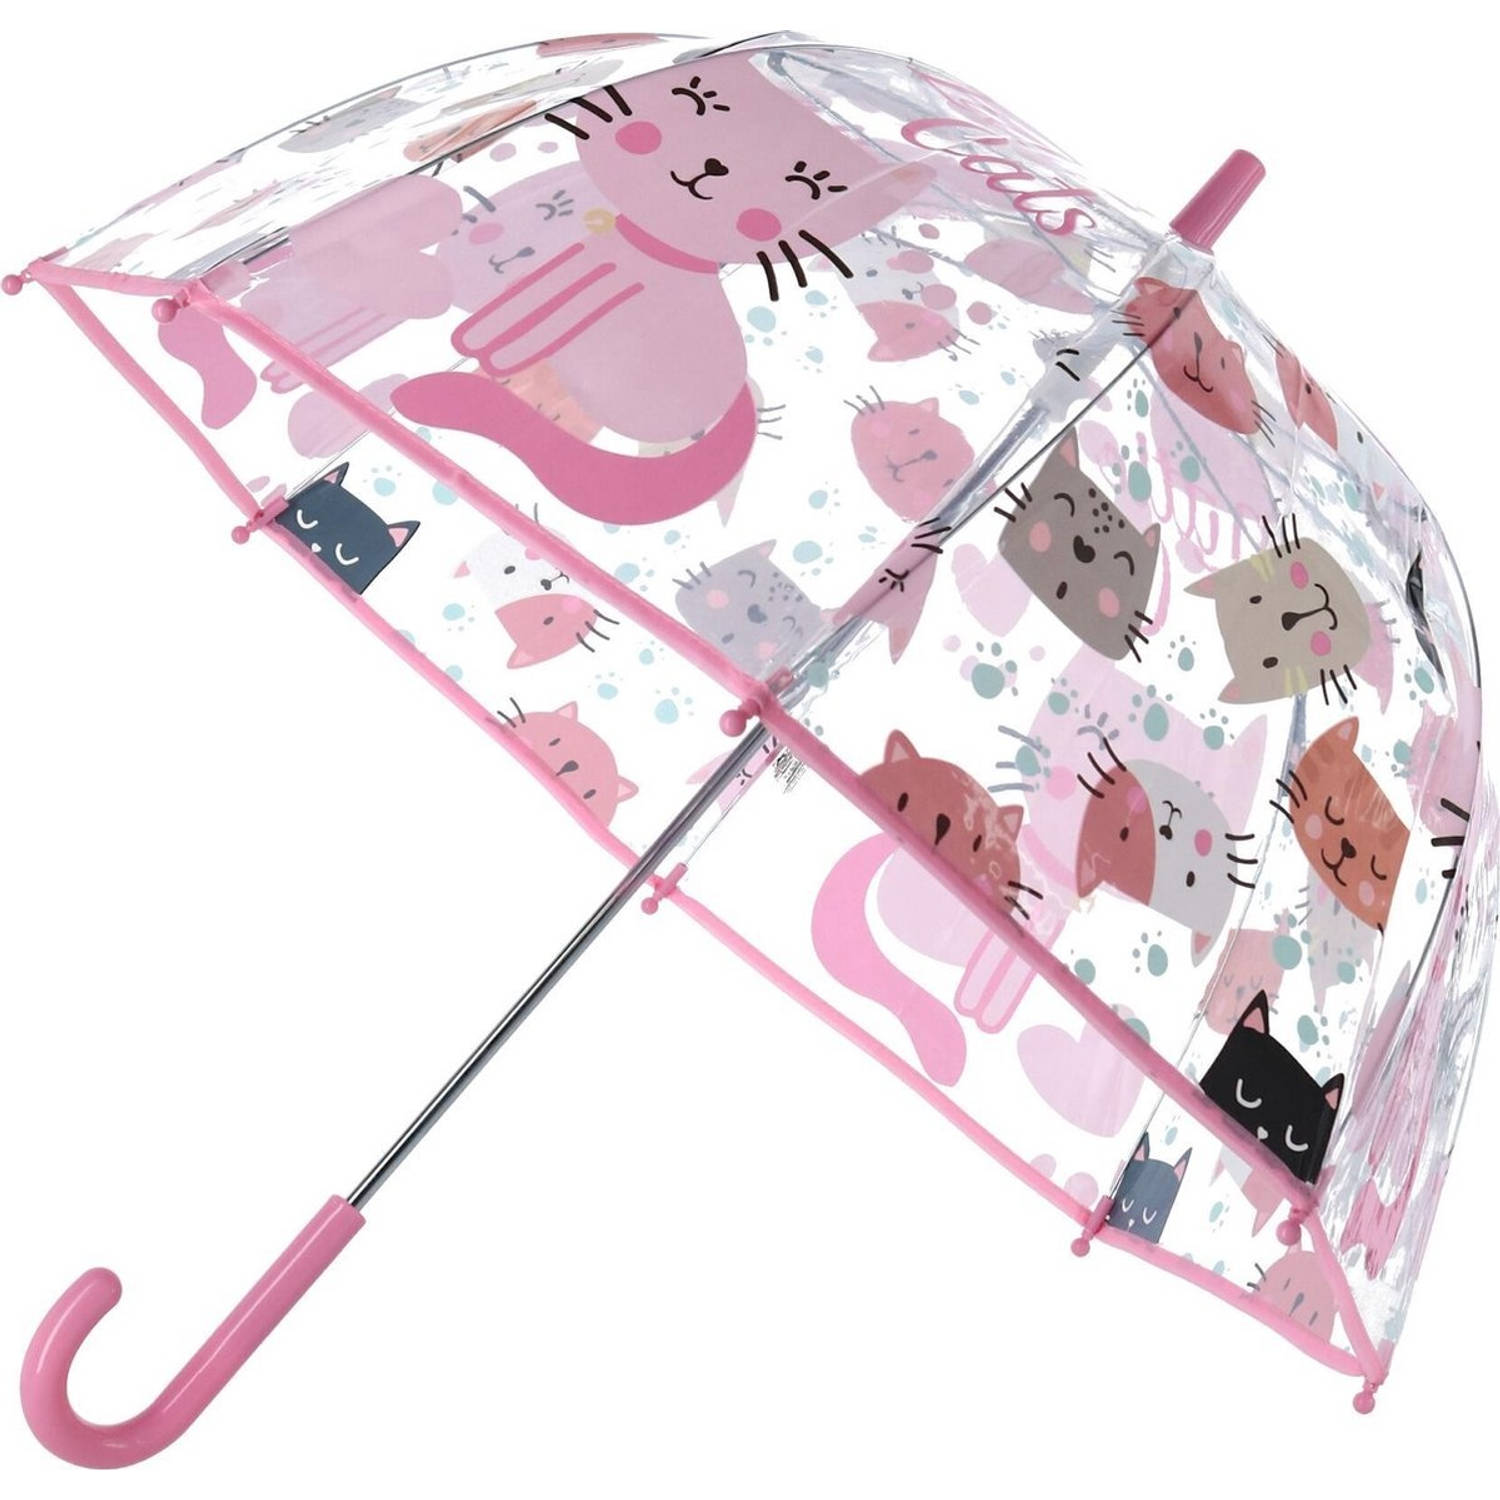 Verwachten opstelling mechanisme Kinderparaplu - Little cats Kinderparaplu - paraplu's - Paraplu - Paraplu  kopen - Paraplu kind - Paraplumerk - | Blokker